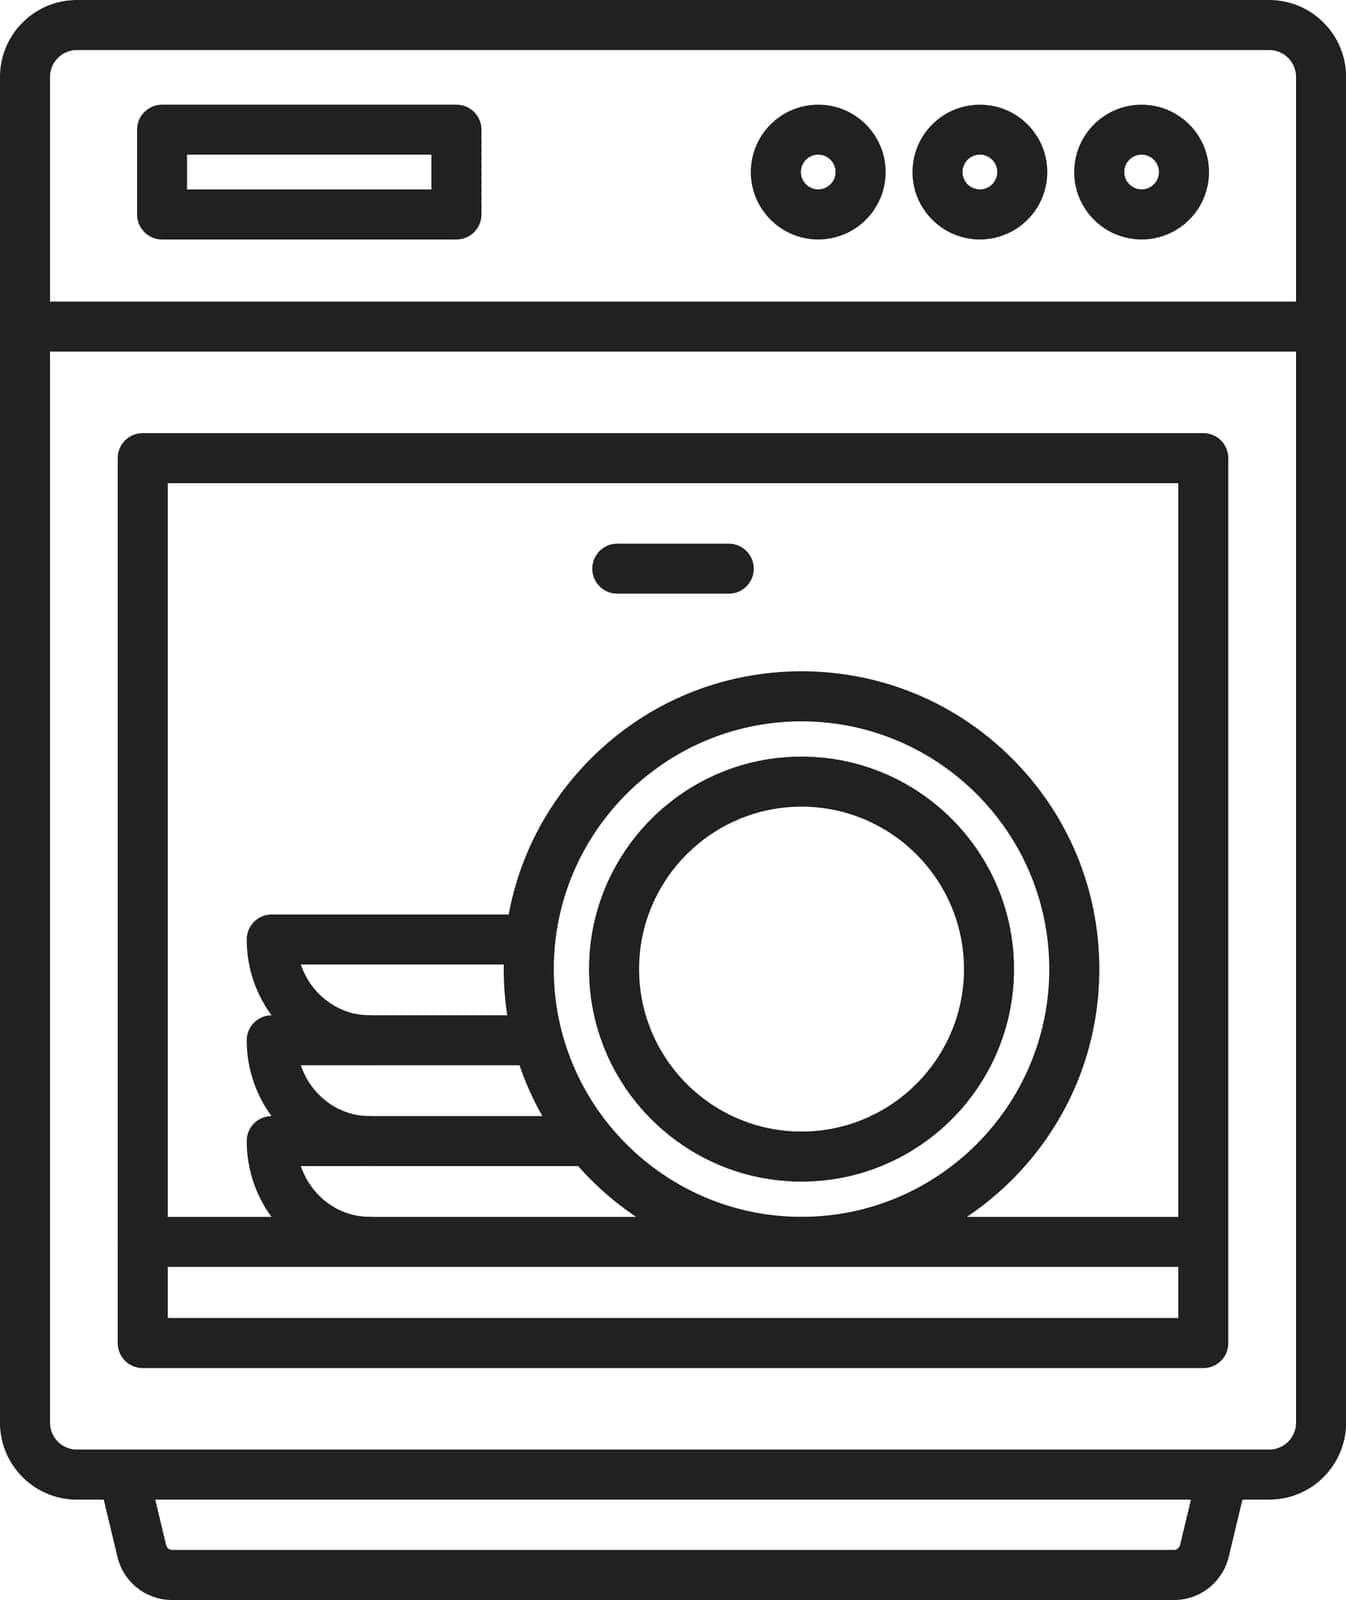 Dish Washer Icon Image. by ICONBUNNY